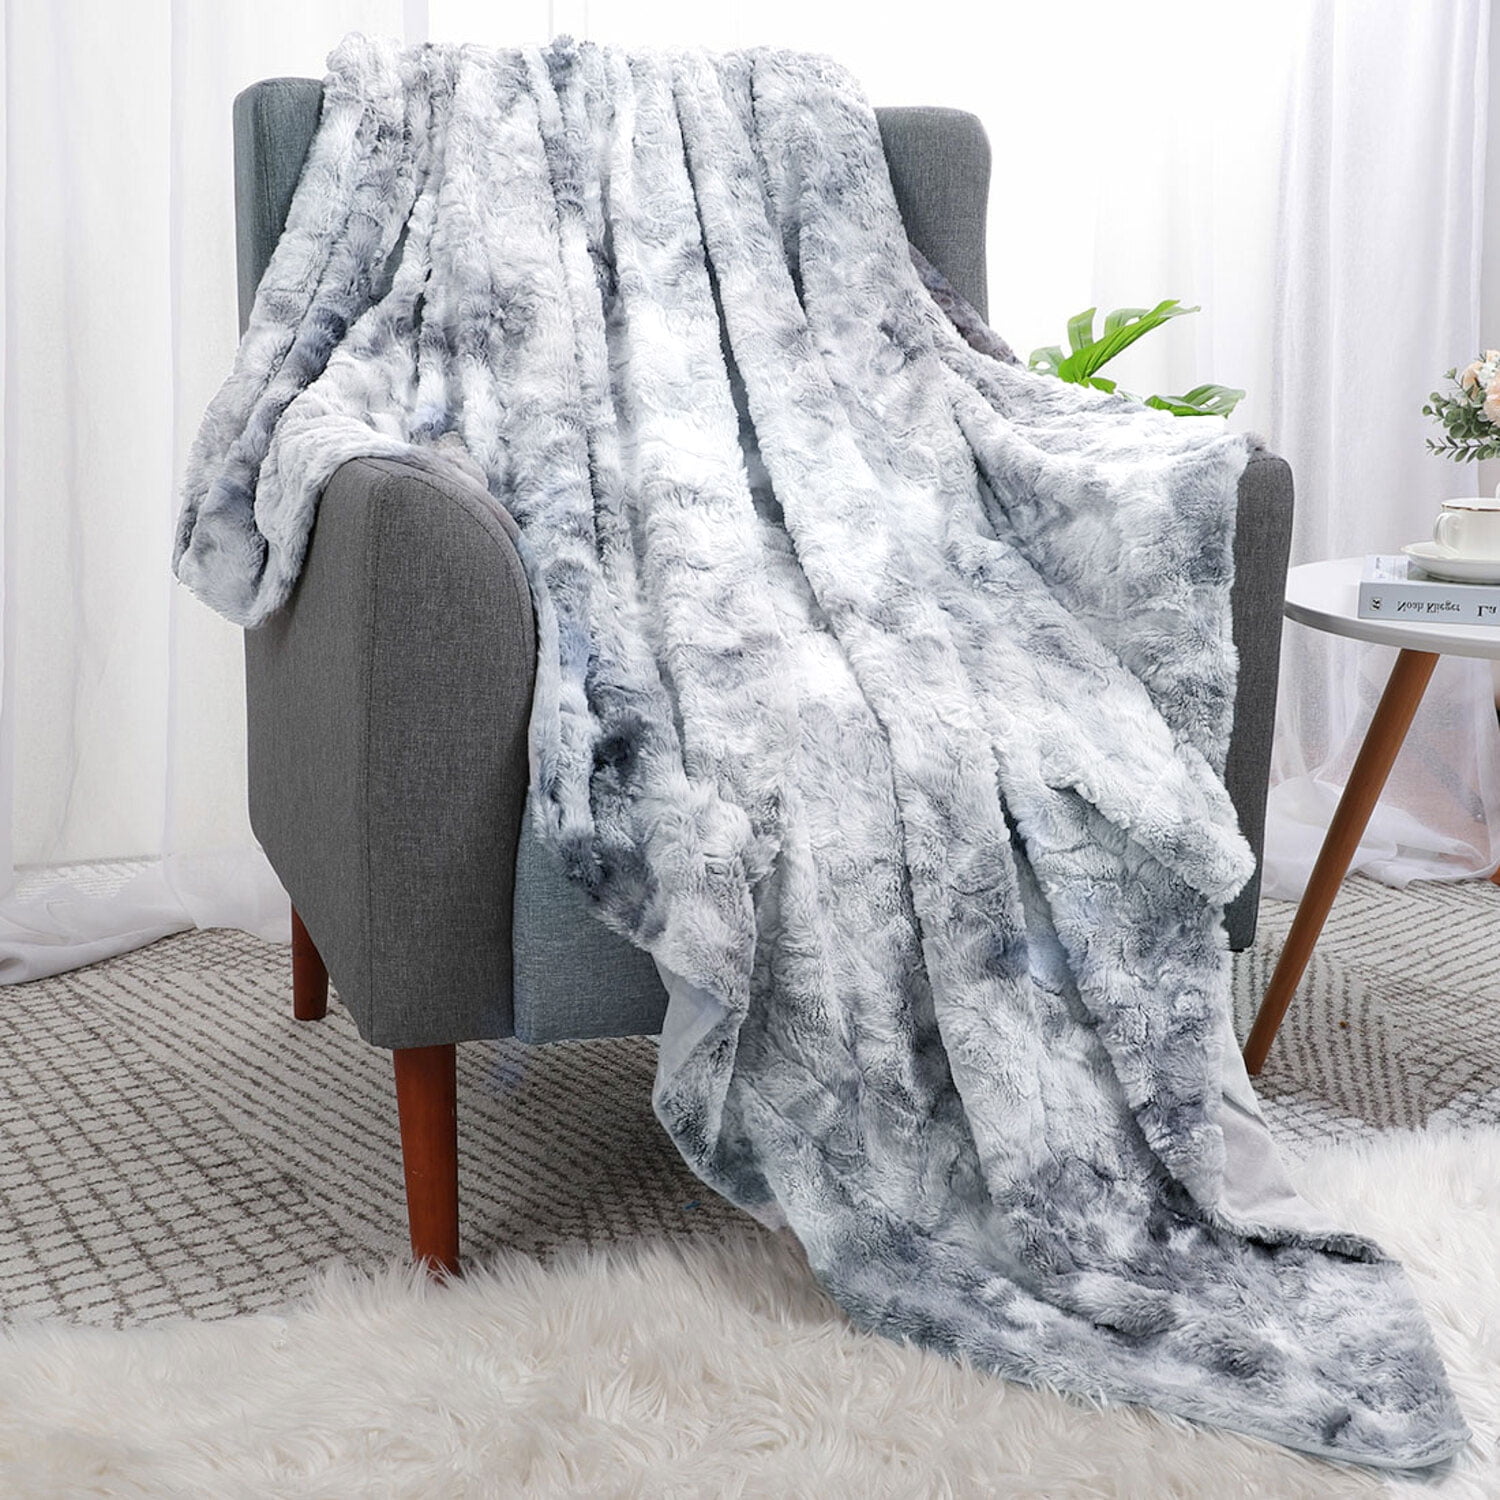 HT&PJ Luxury Faux Fur Throw Blanket Reversible Plush Sherpa Fleece Cozy Throw for Living Room Decor Sofa Chair Couch Blanket GD-13-Black, 60X80